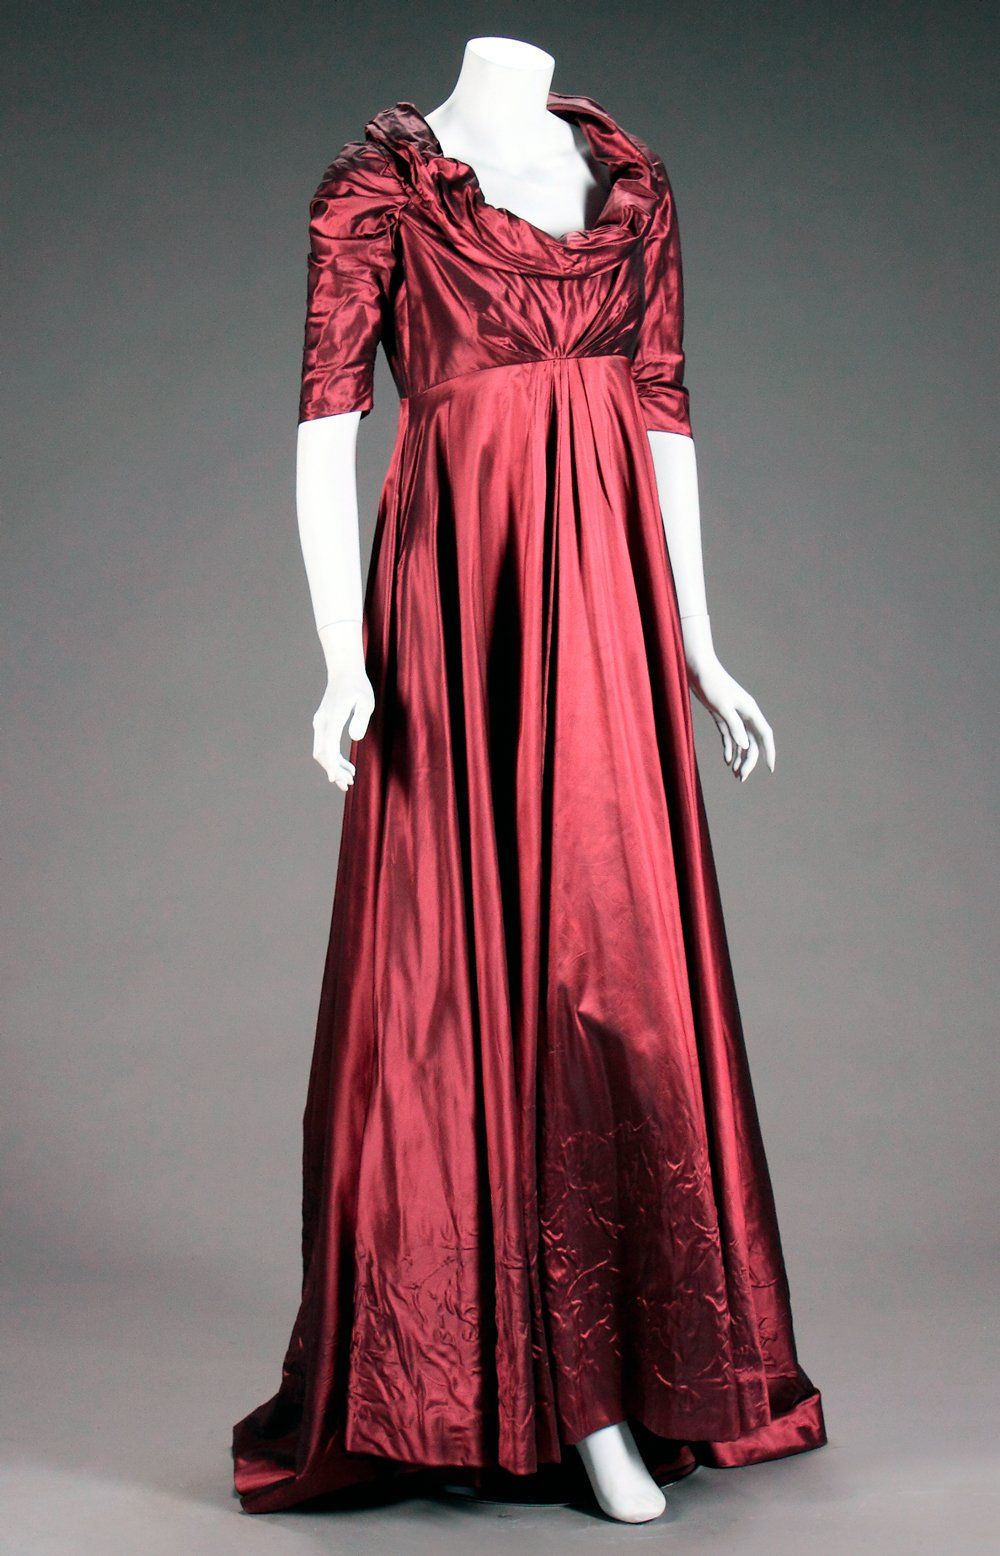 Streisand's burgundy taffeta gown.